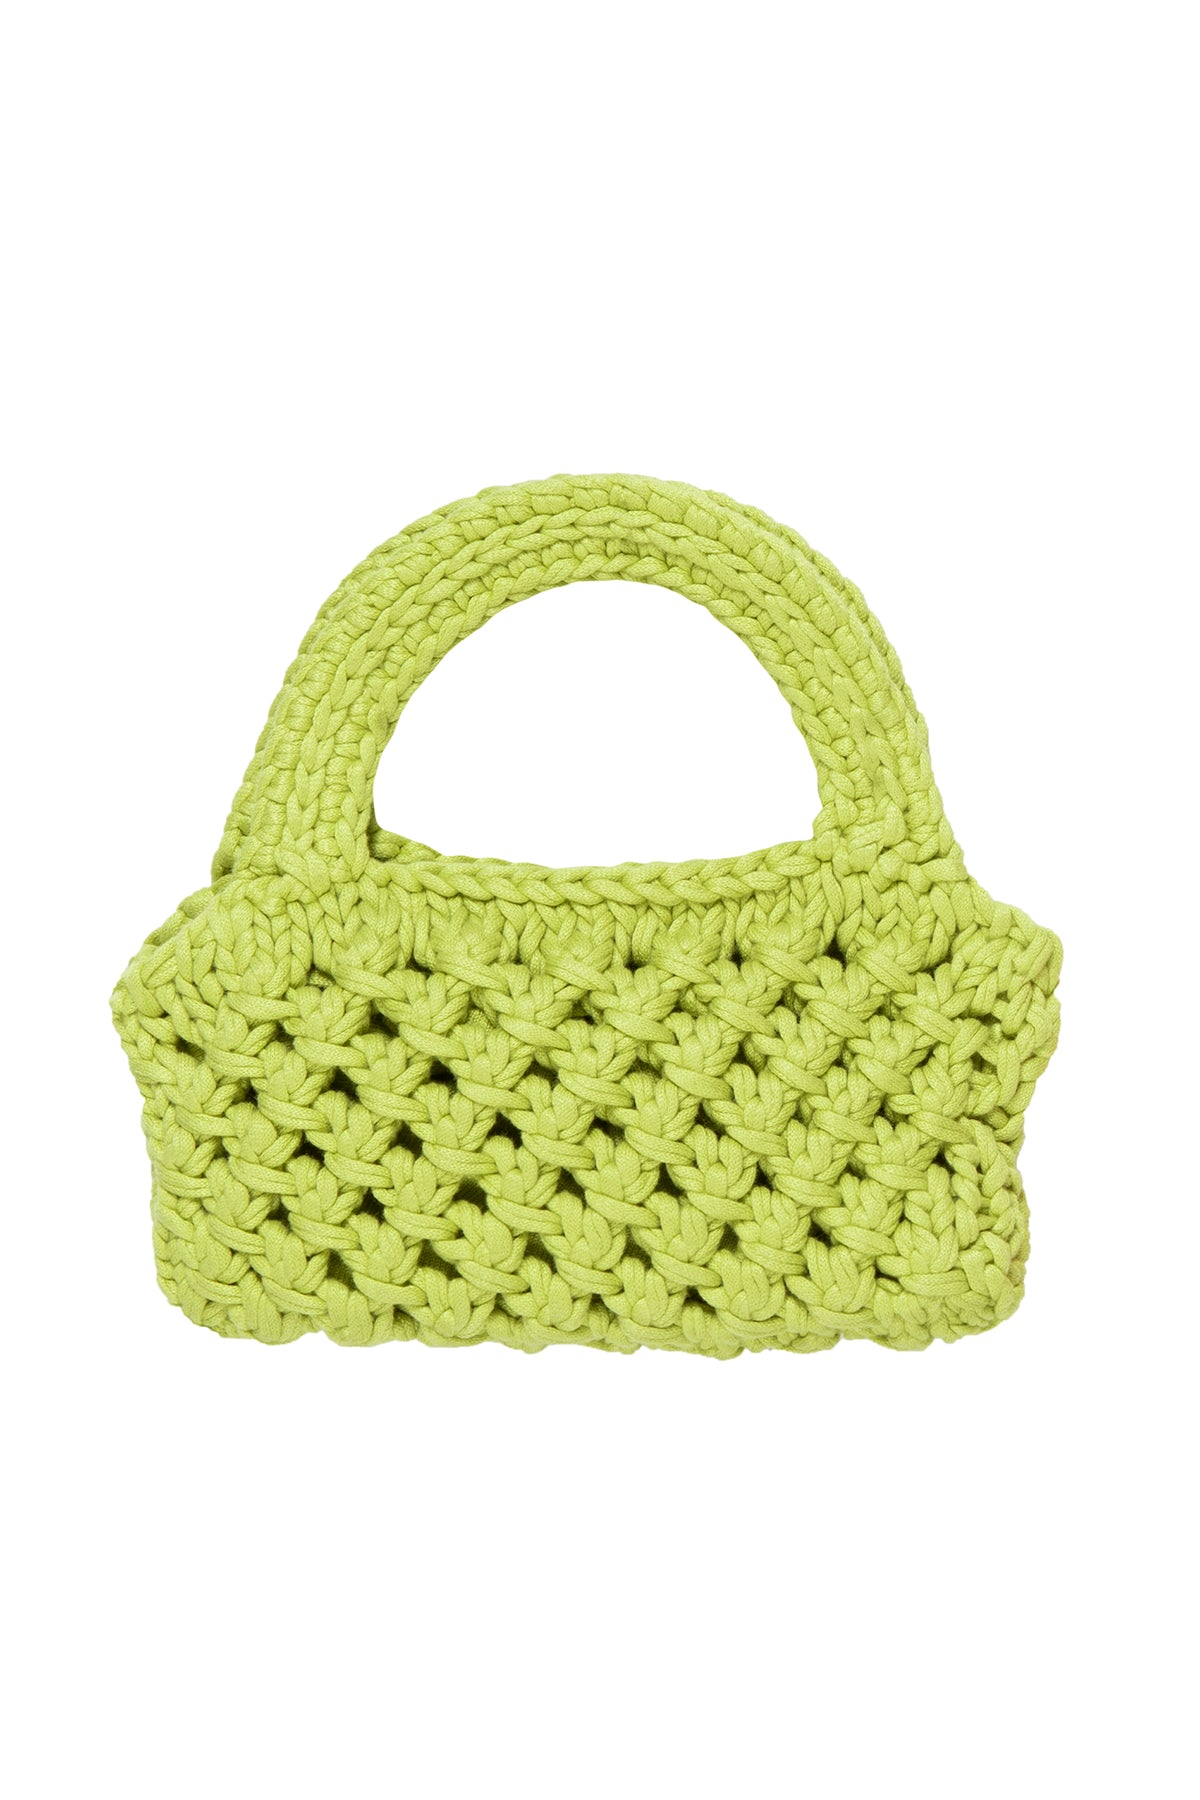 Bennie Crochet Bag in Lime Green-24665045795009